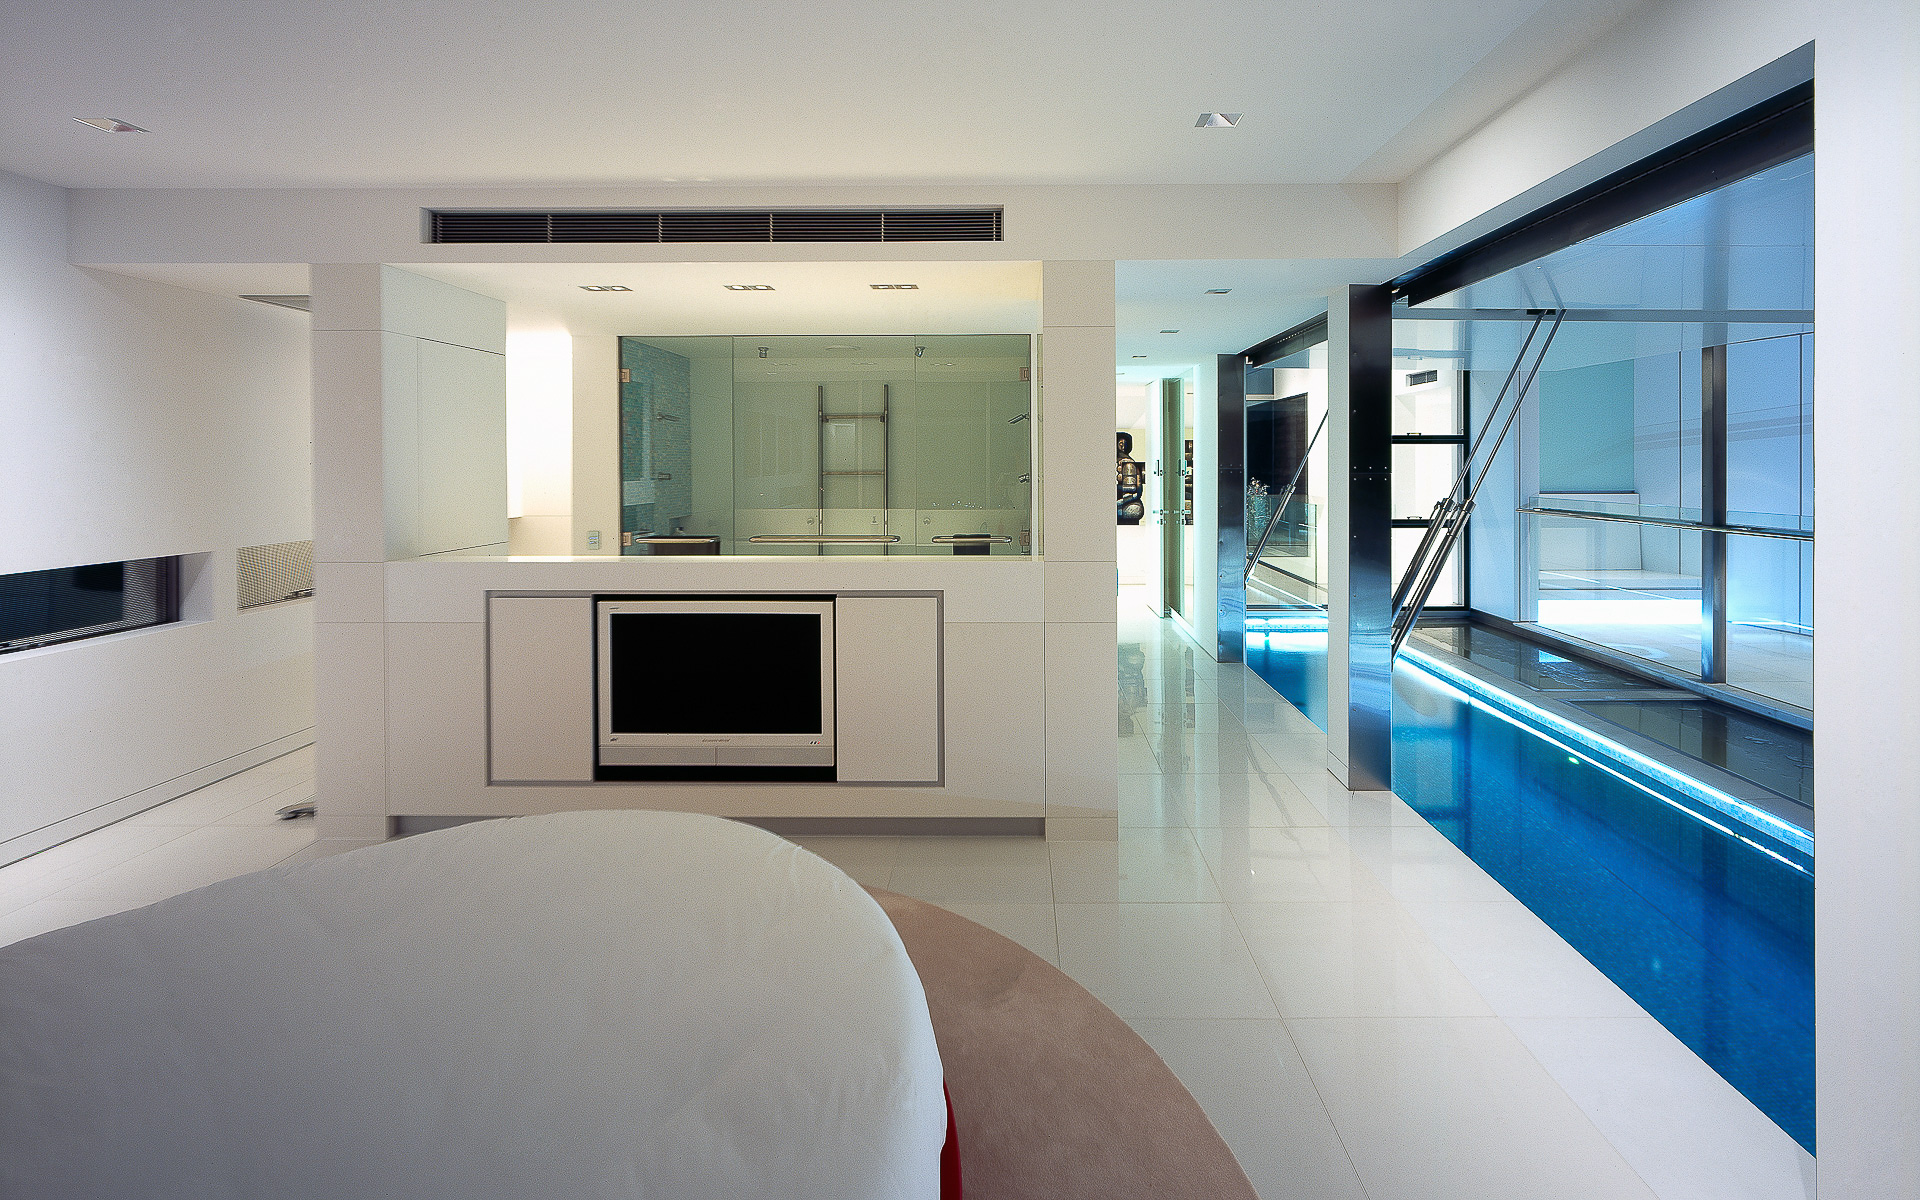 Bedroom, bed, custom made, White interior design, interiors, corian, glacier white, luxury, ultramodern, minimal, minka joinery